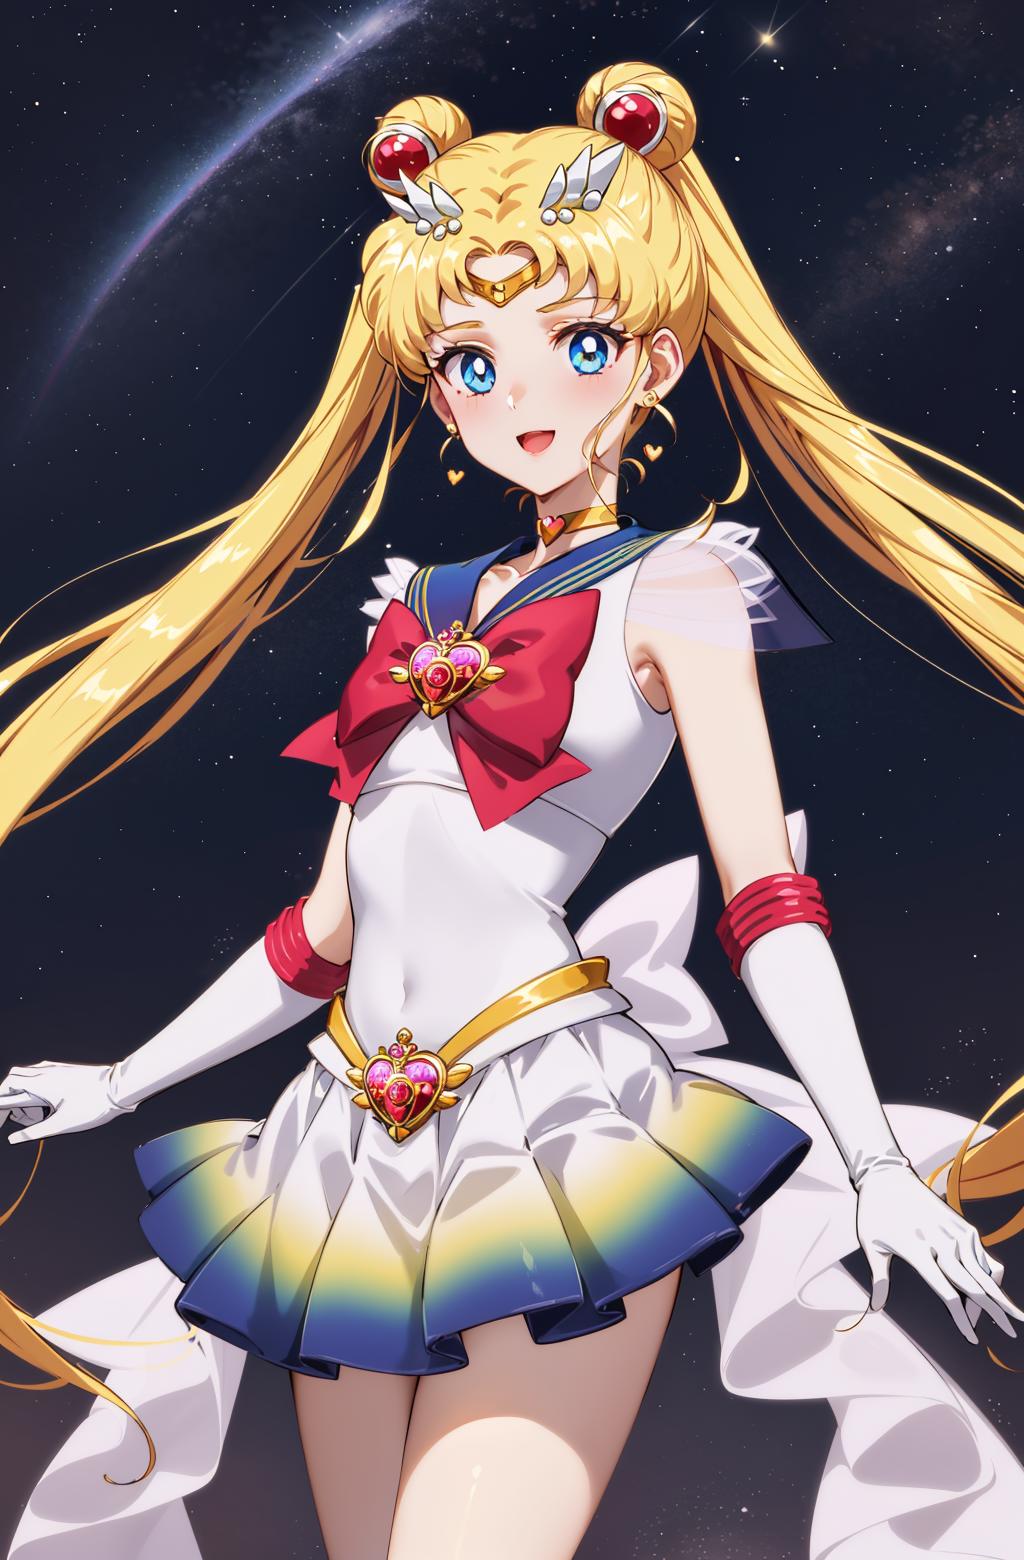 Super Sailor Moon LoRa image by lostpast